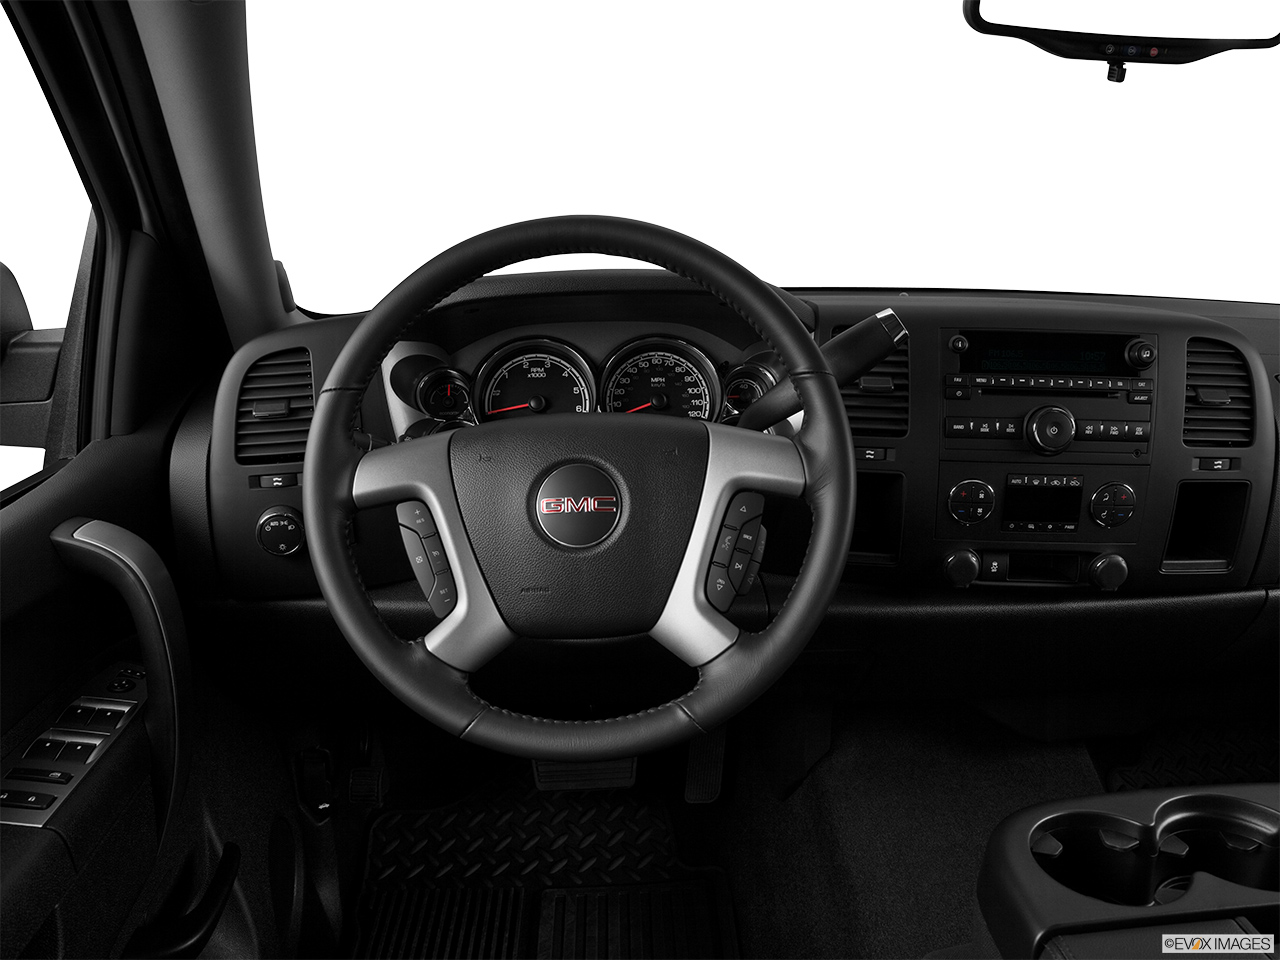 2013 GMC Sierra 1500 Hybrid 3HA Steering wheel/Center Console. 